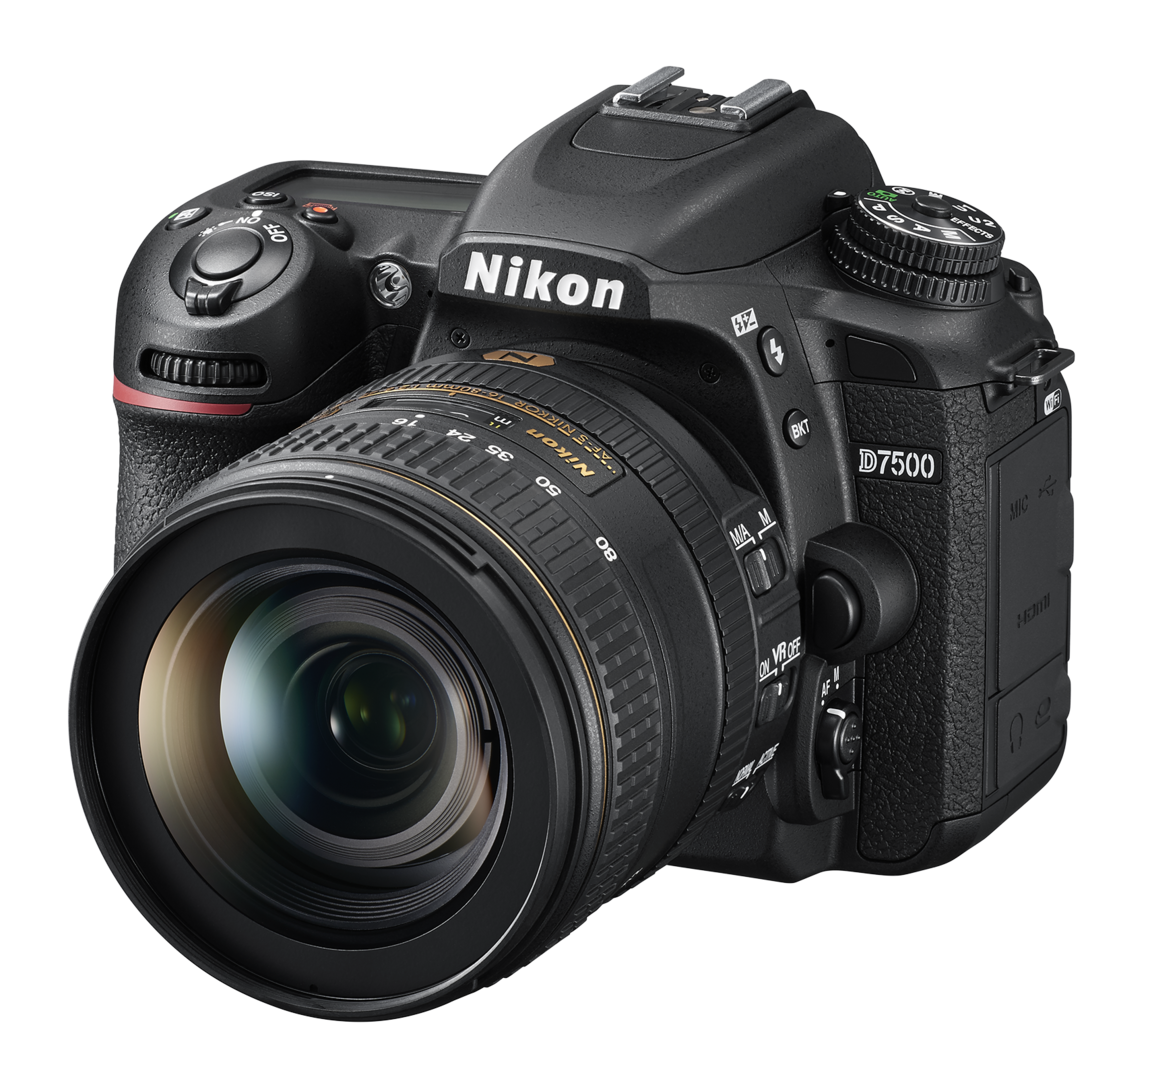 Nikon D7500 DSLR  20.9 MP DX Format Digital SLR Camera